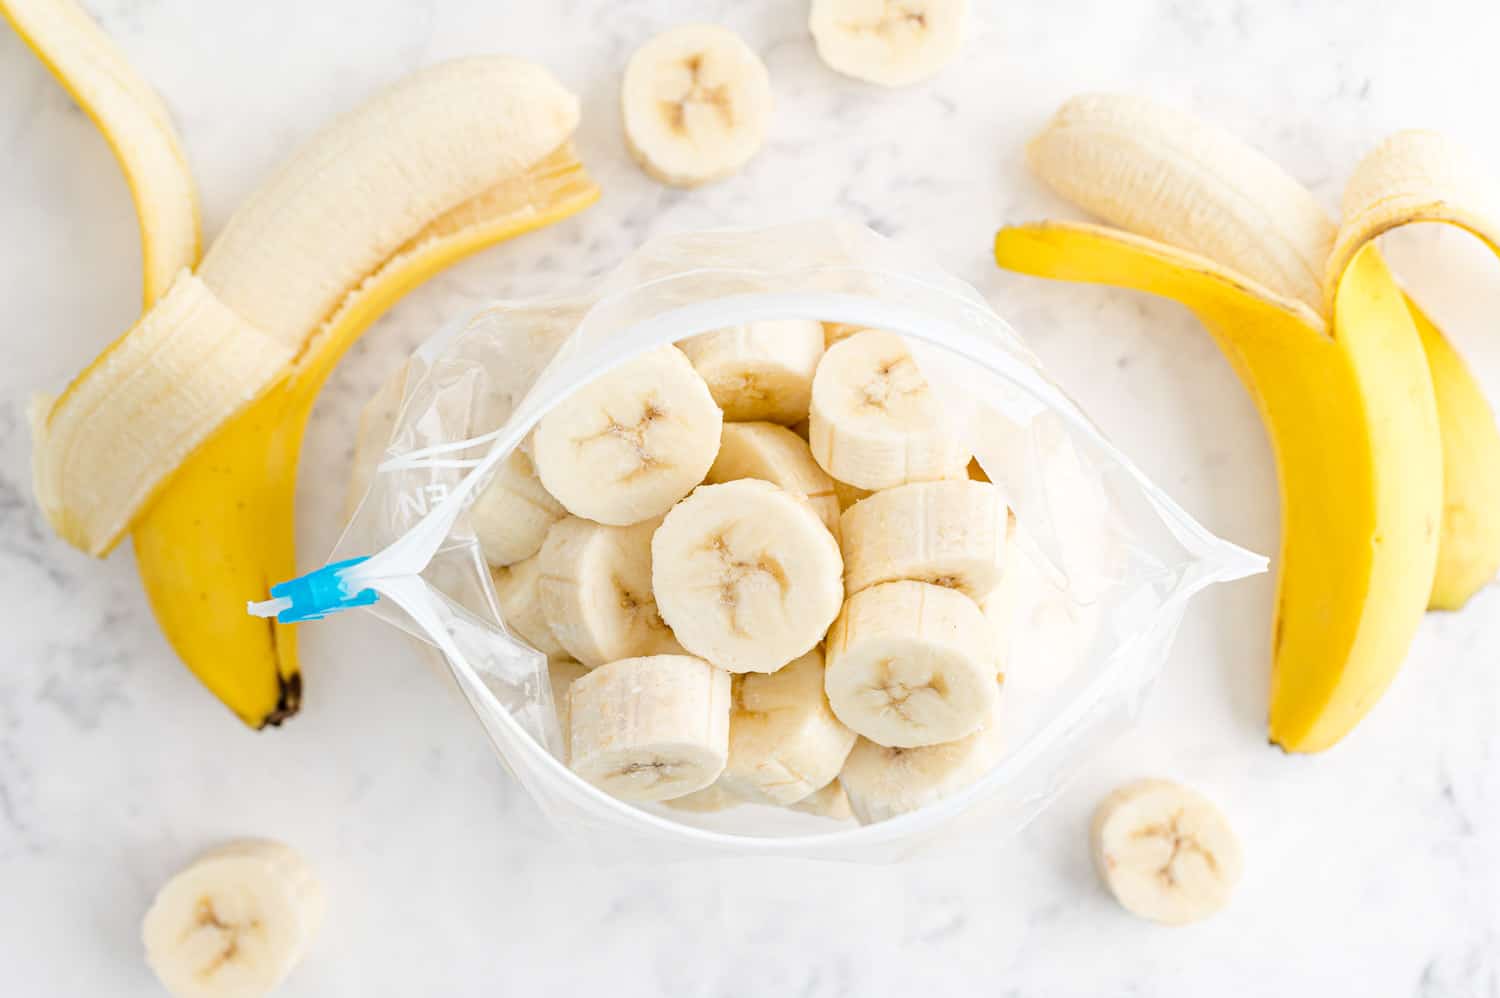 Bananas in freezer bag.